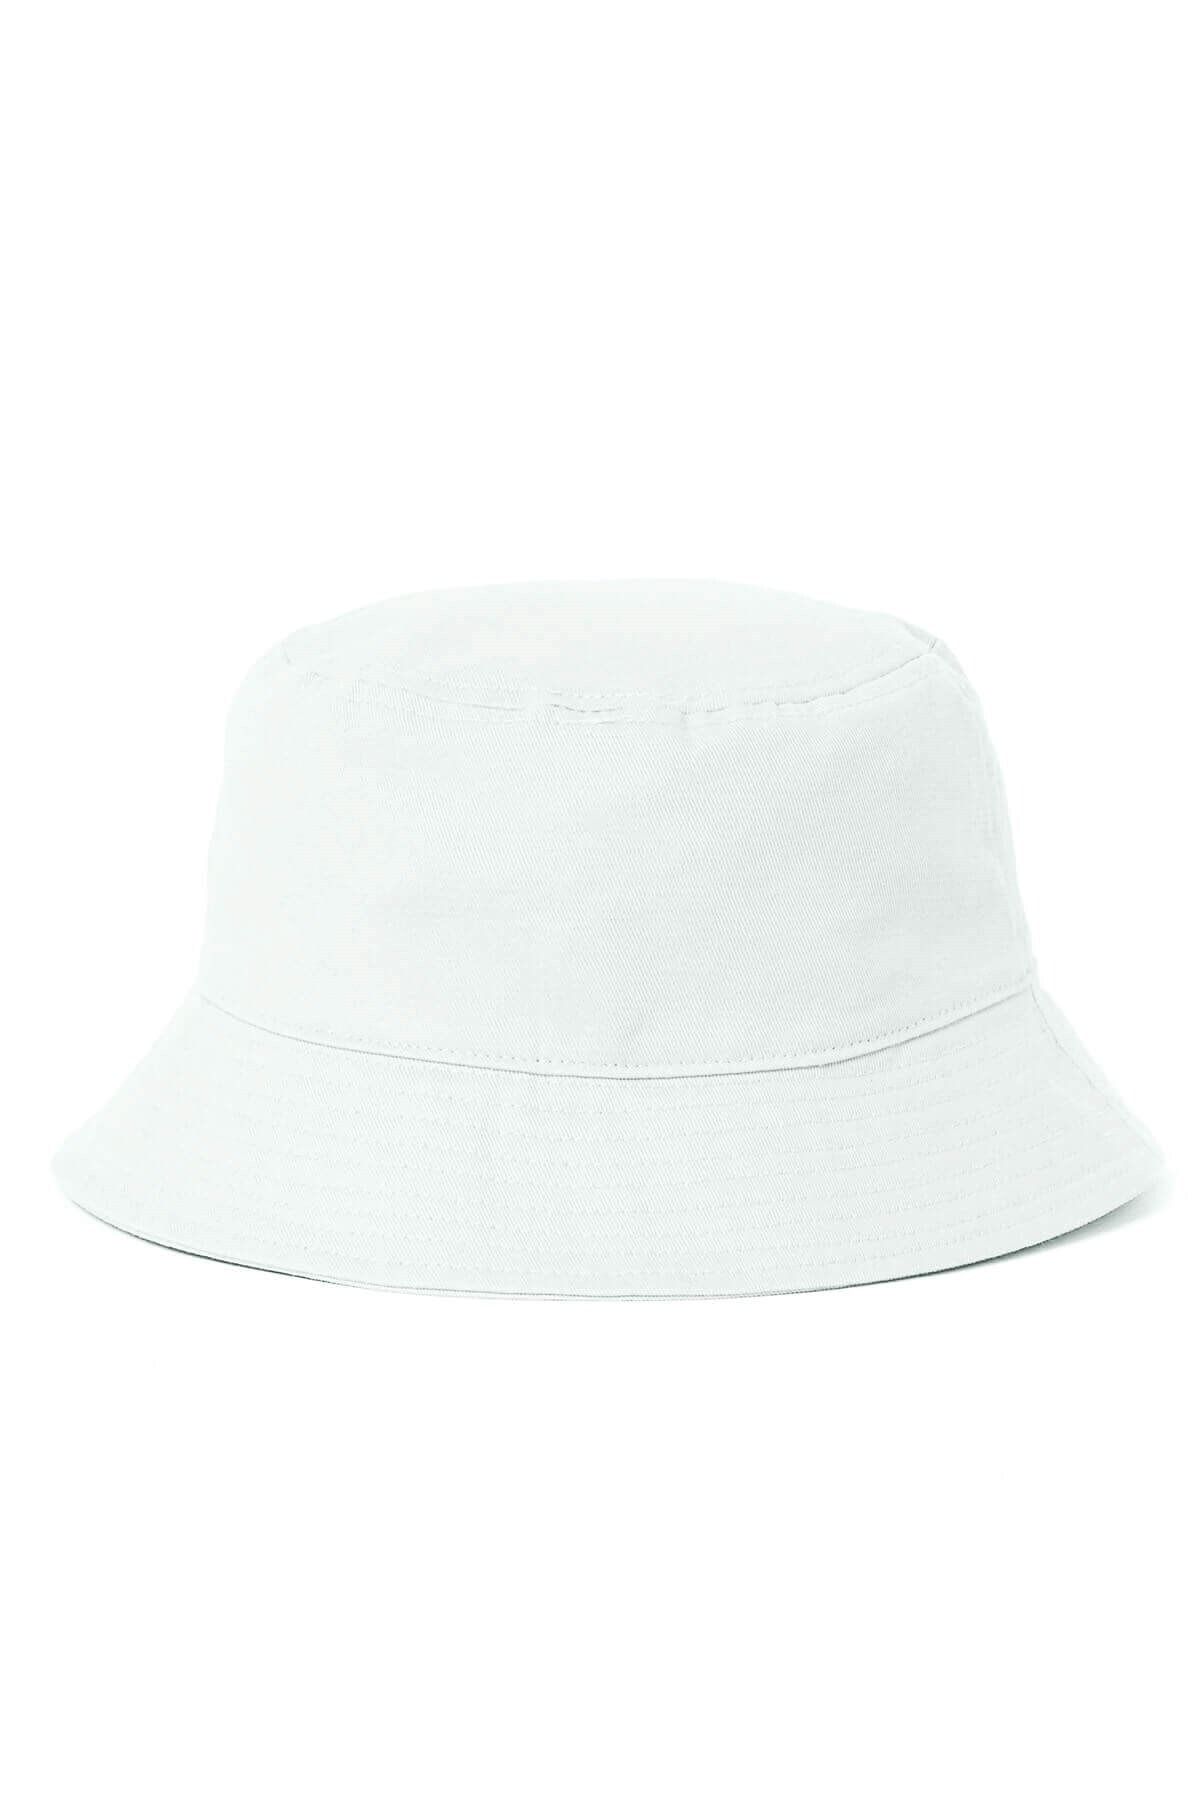 Külah Düz Kova Şapka Balıkçı Şapka Bucket Hat